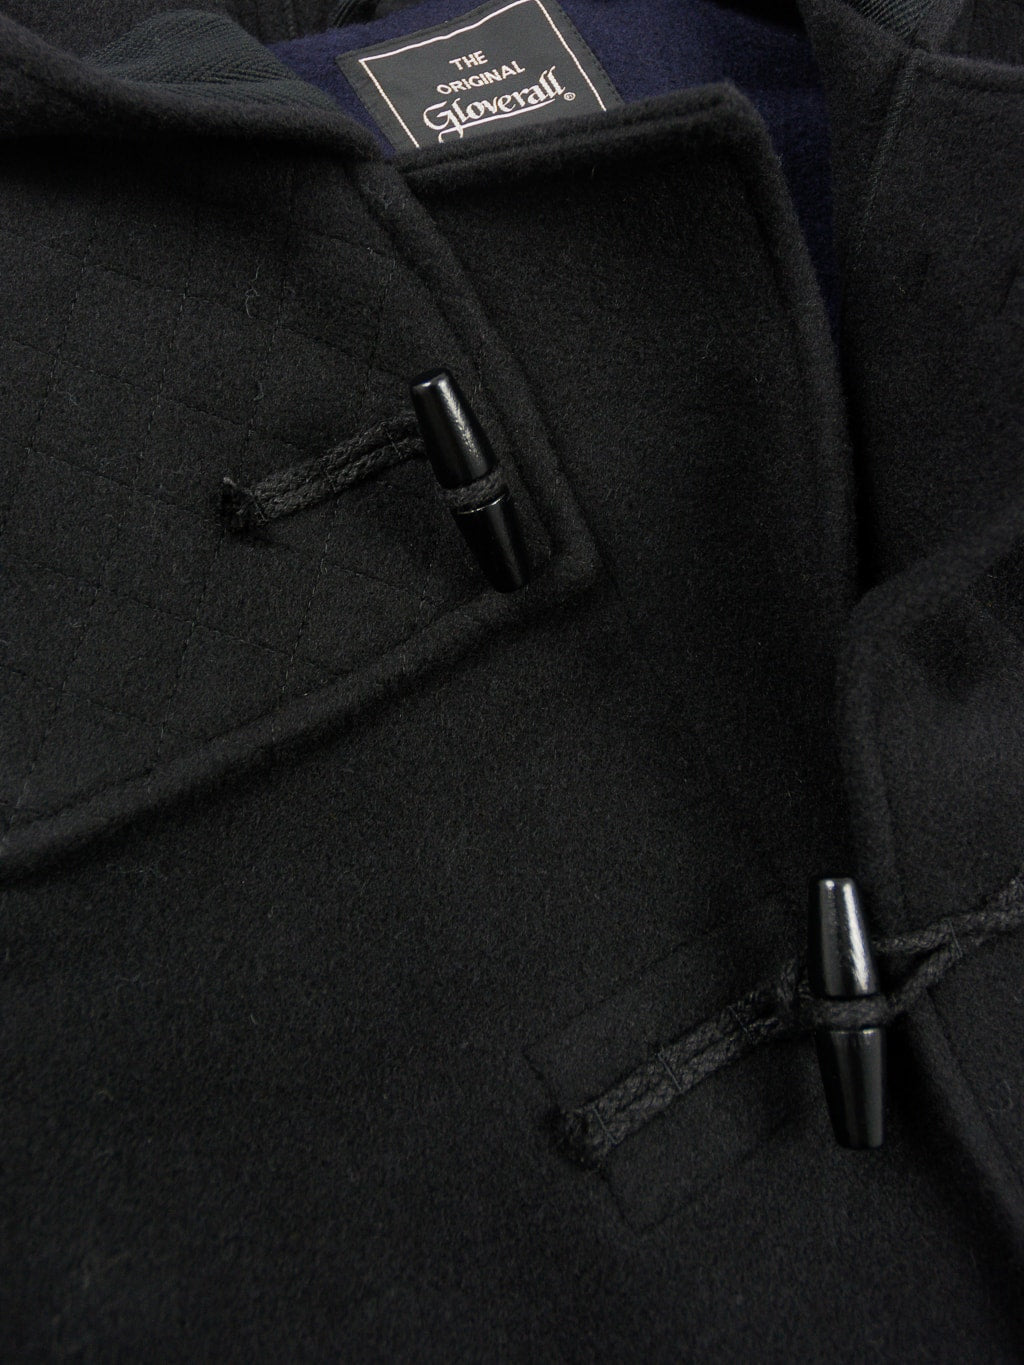 3sixteen x Gloverall Monty Duffle Coat black navy front details